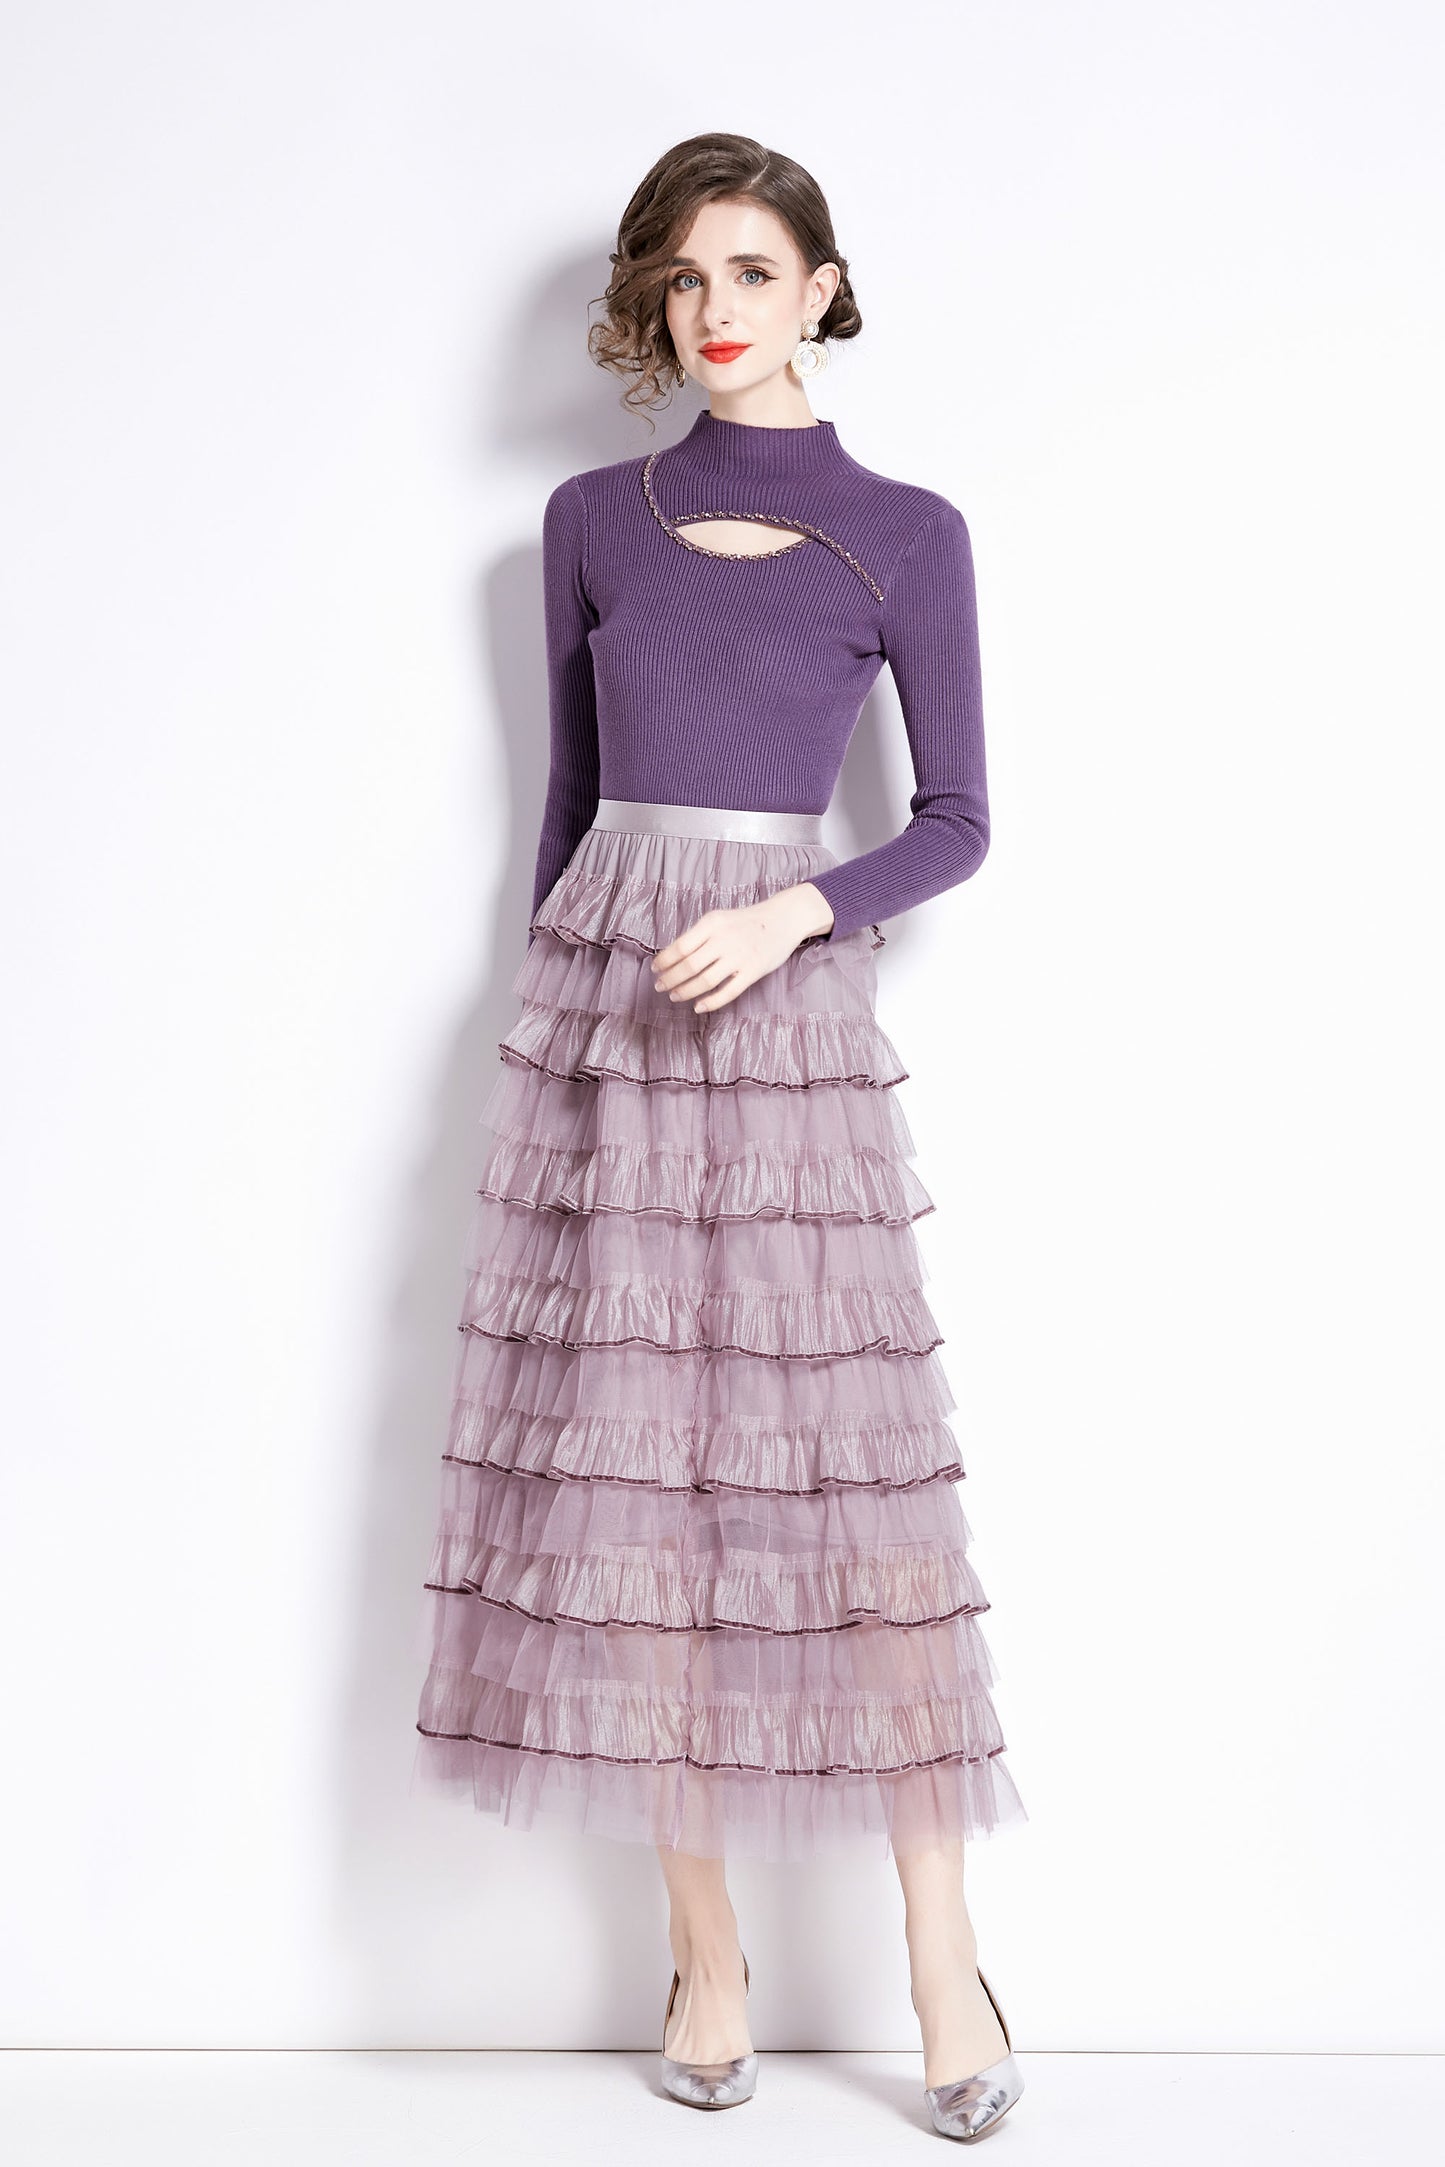 Women's Fall Winter Two-Piece Sweater Knit Tops Sheer Mesh Skirt Midi Dress